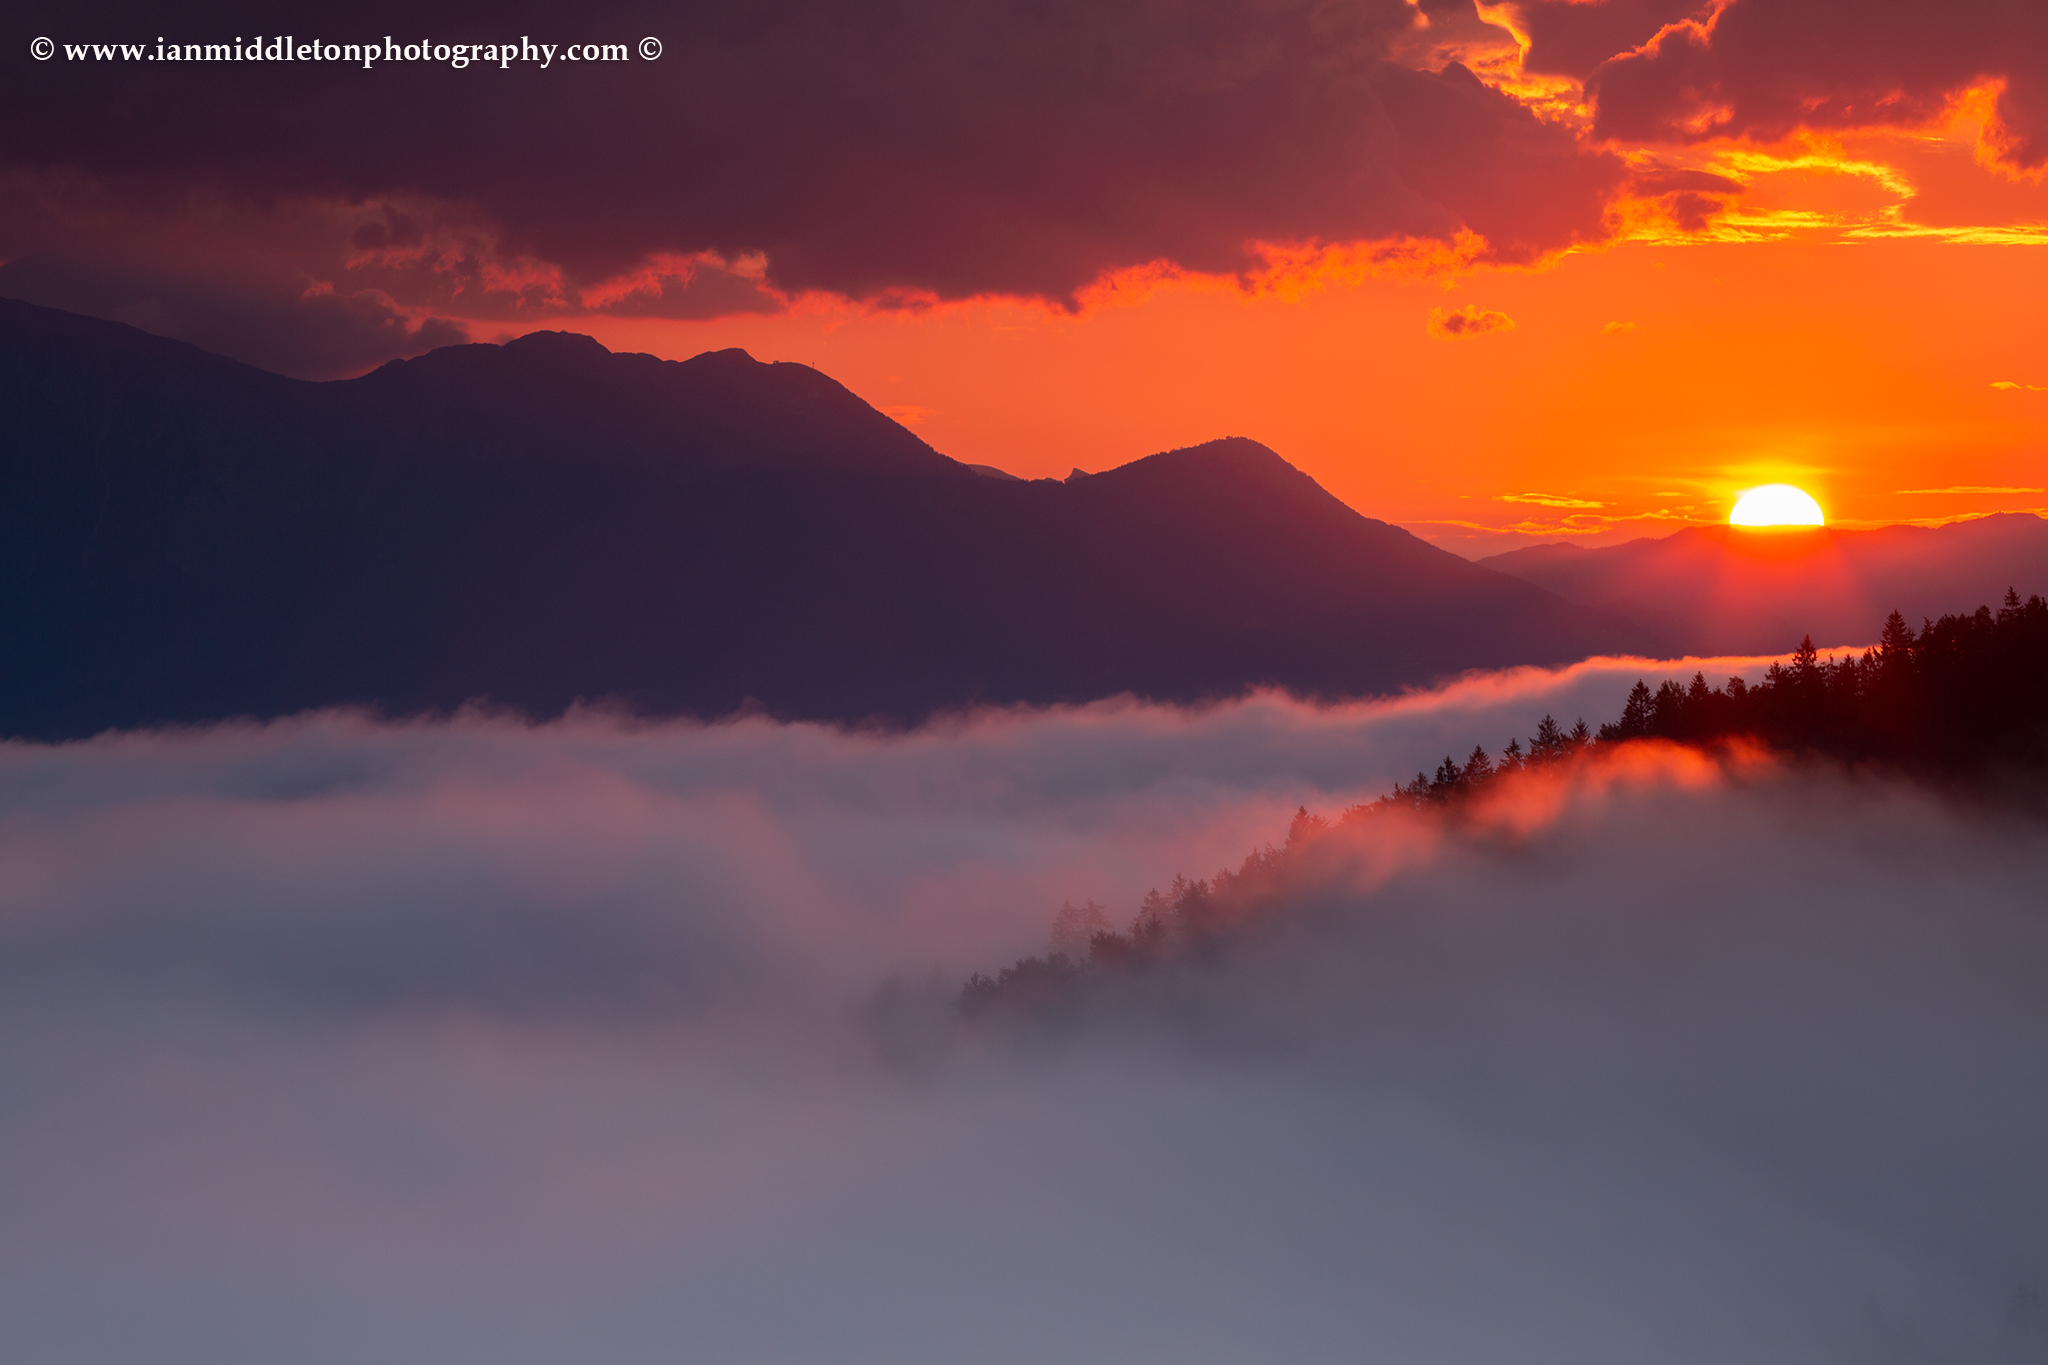 Sunrise over the Kamnik Alps, seen from Rantovše hill near Skofja Loka, Slovenia.